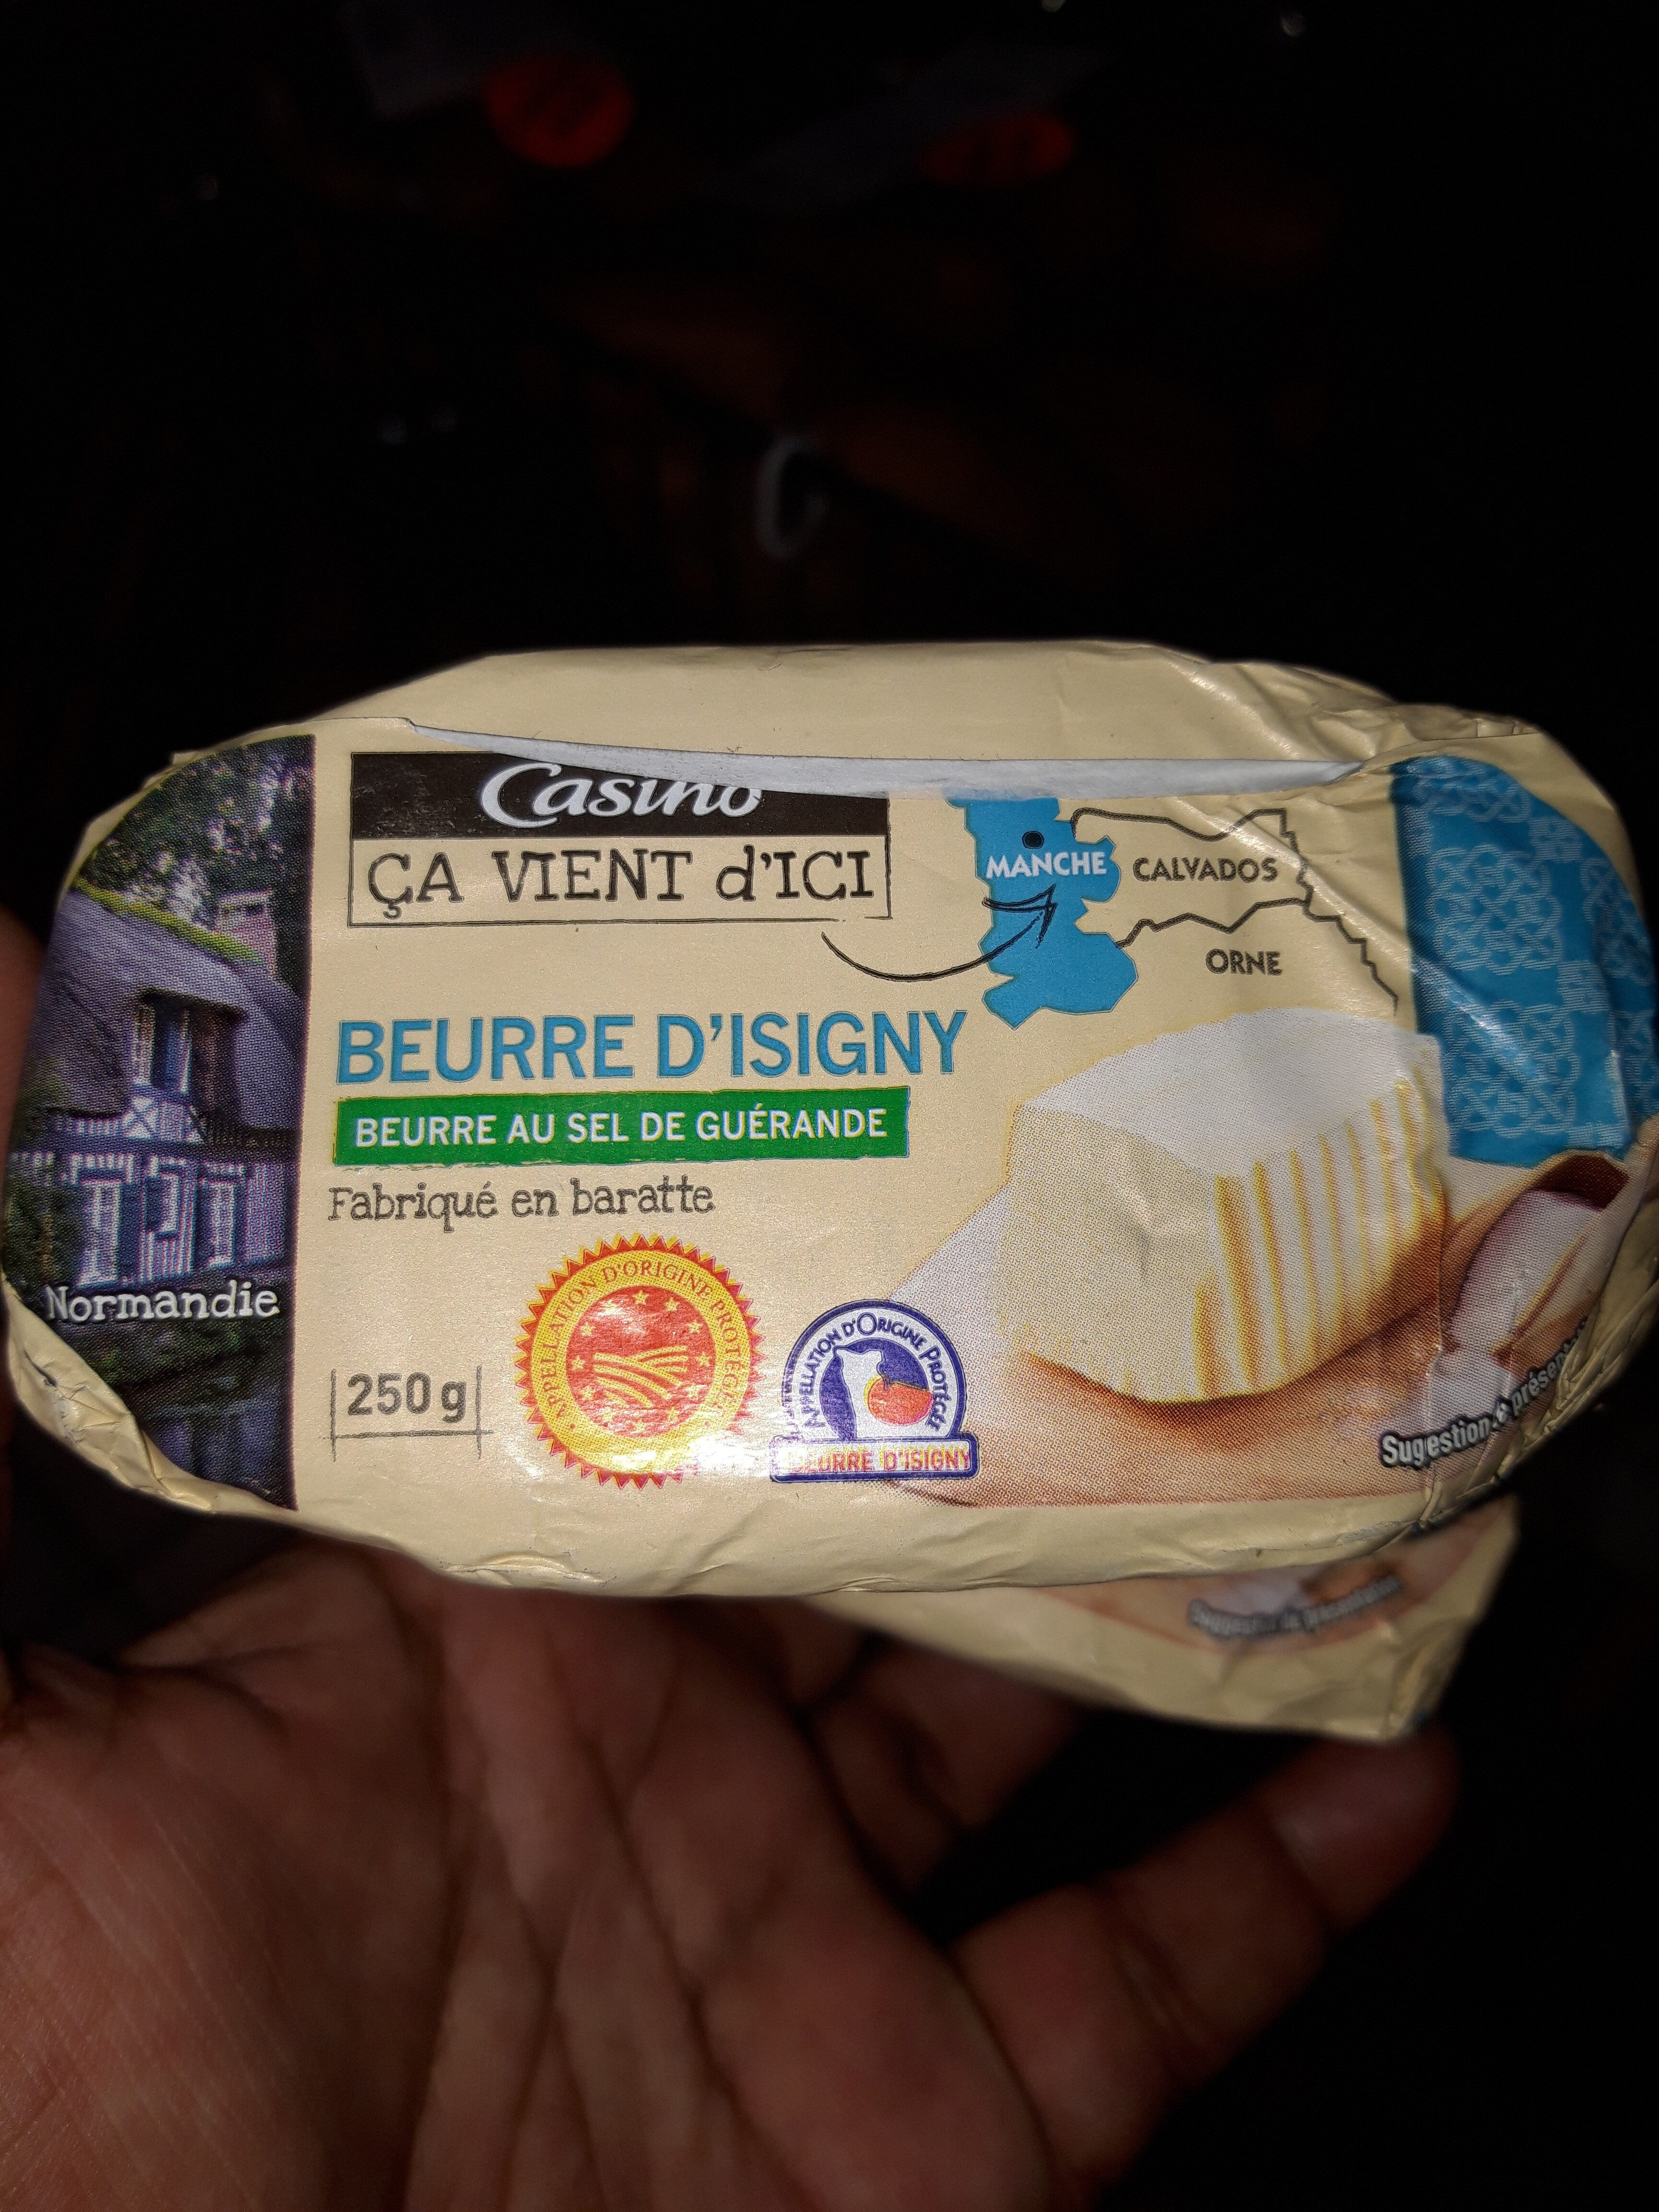 Beuure d'Isigny beurre au sel de Guérande - Product - fr